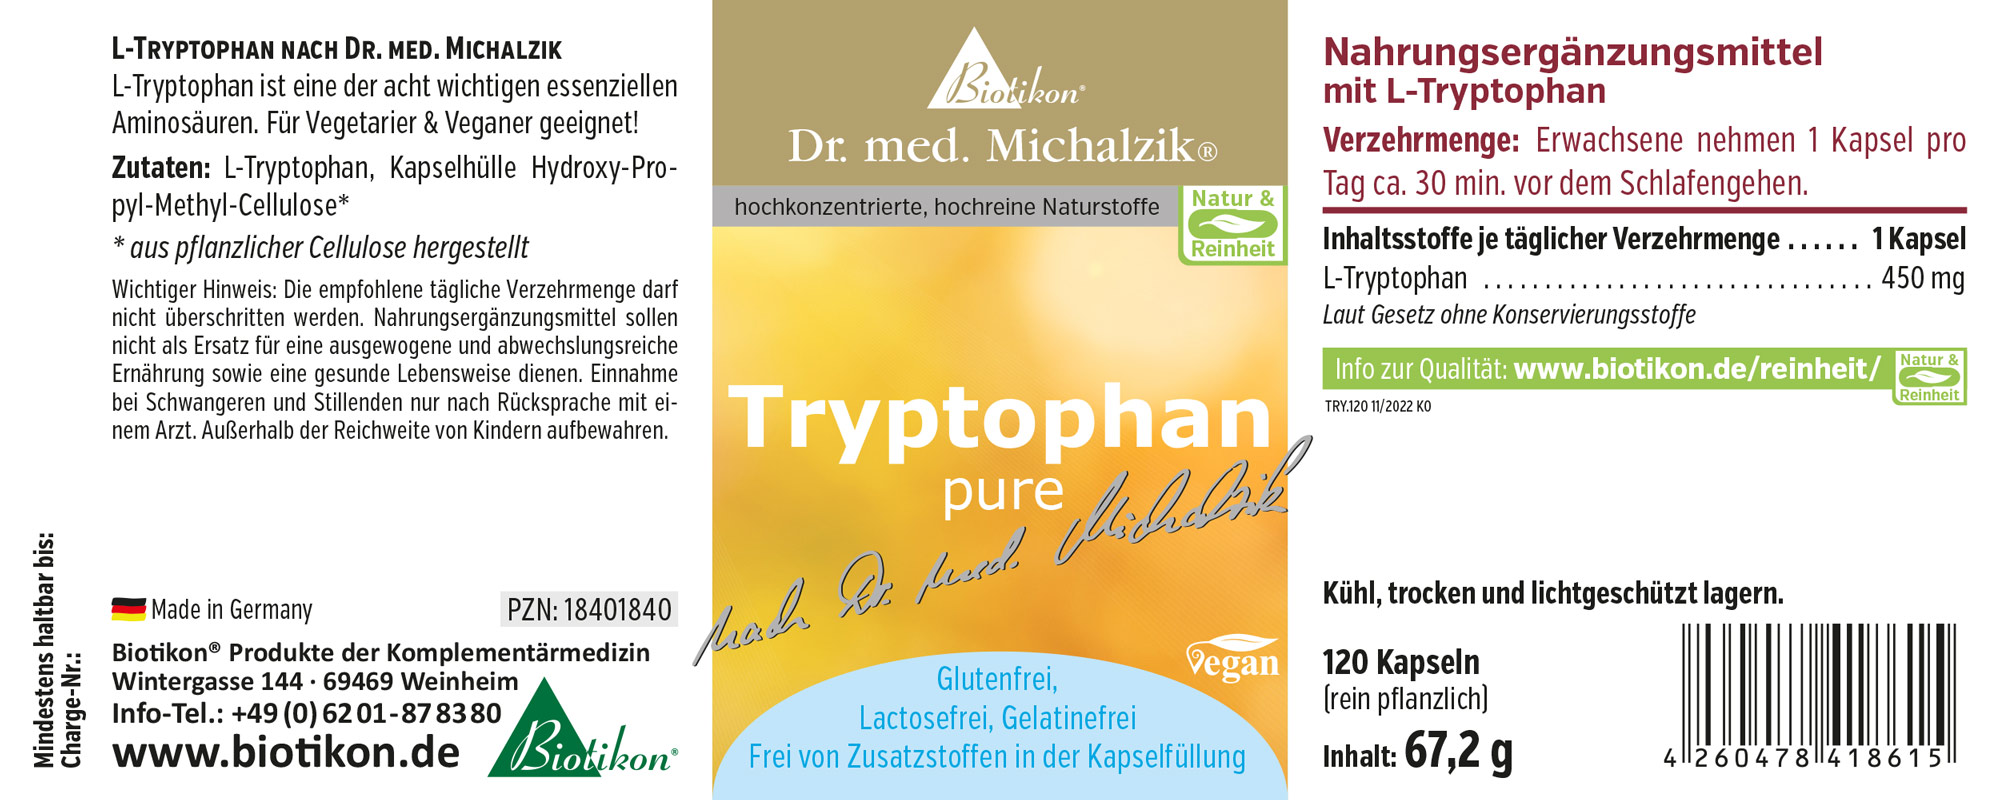 L-Tryptophan nach Dr. med. Michalzik